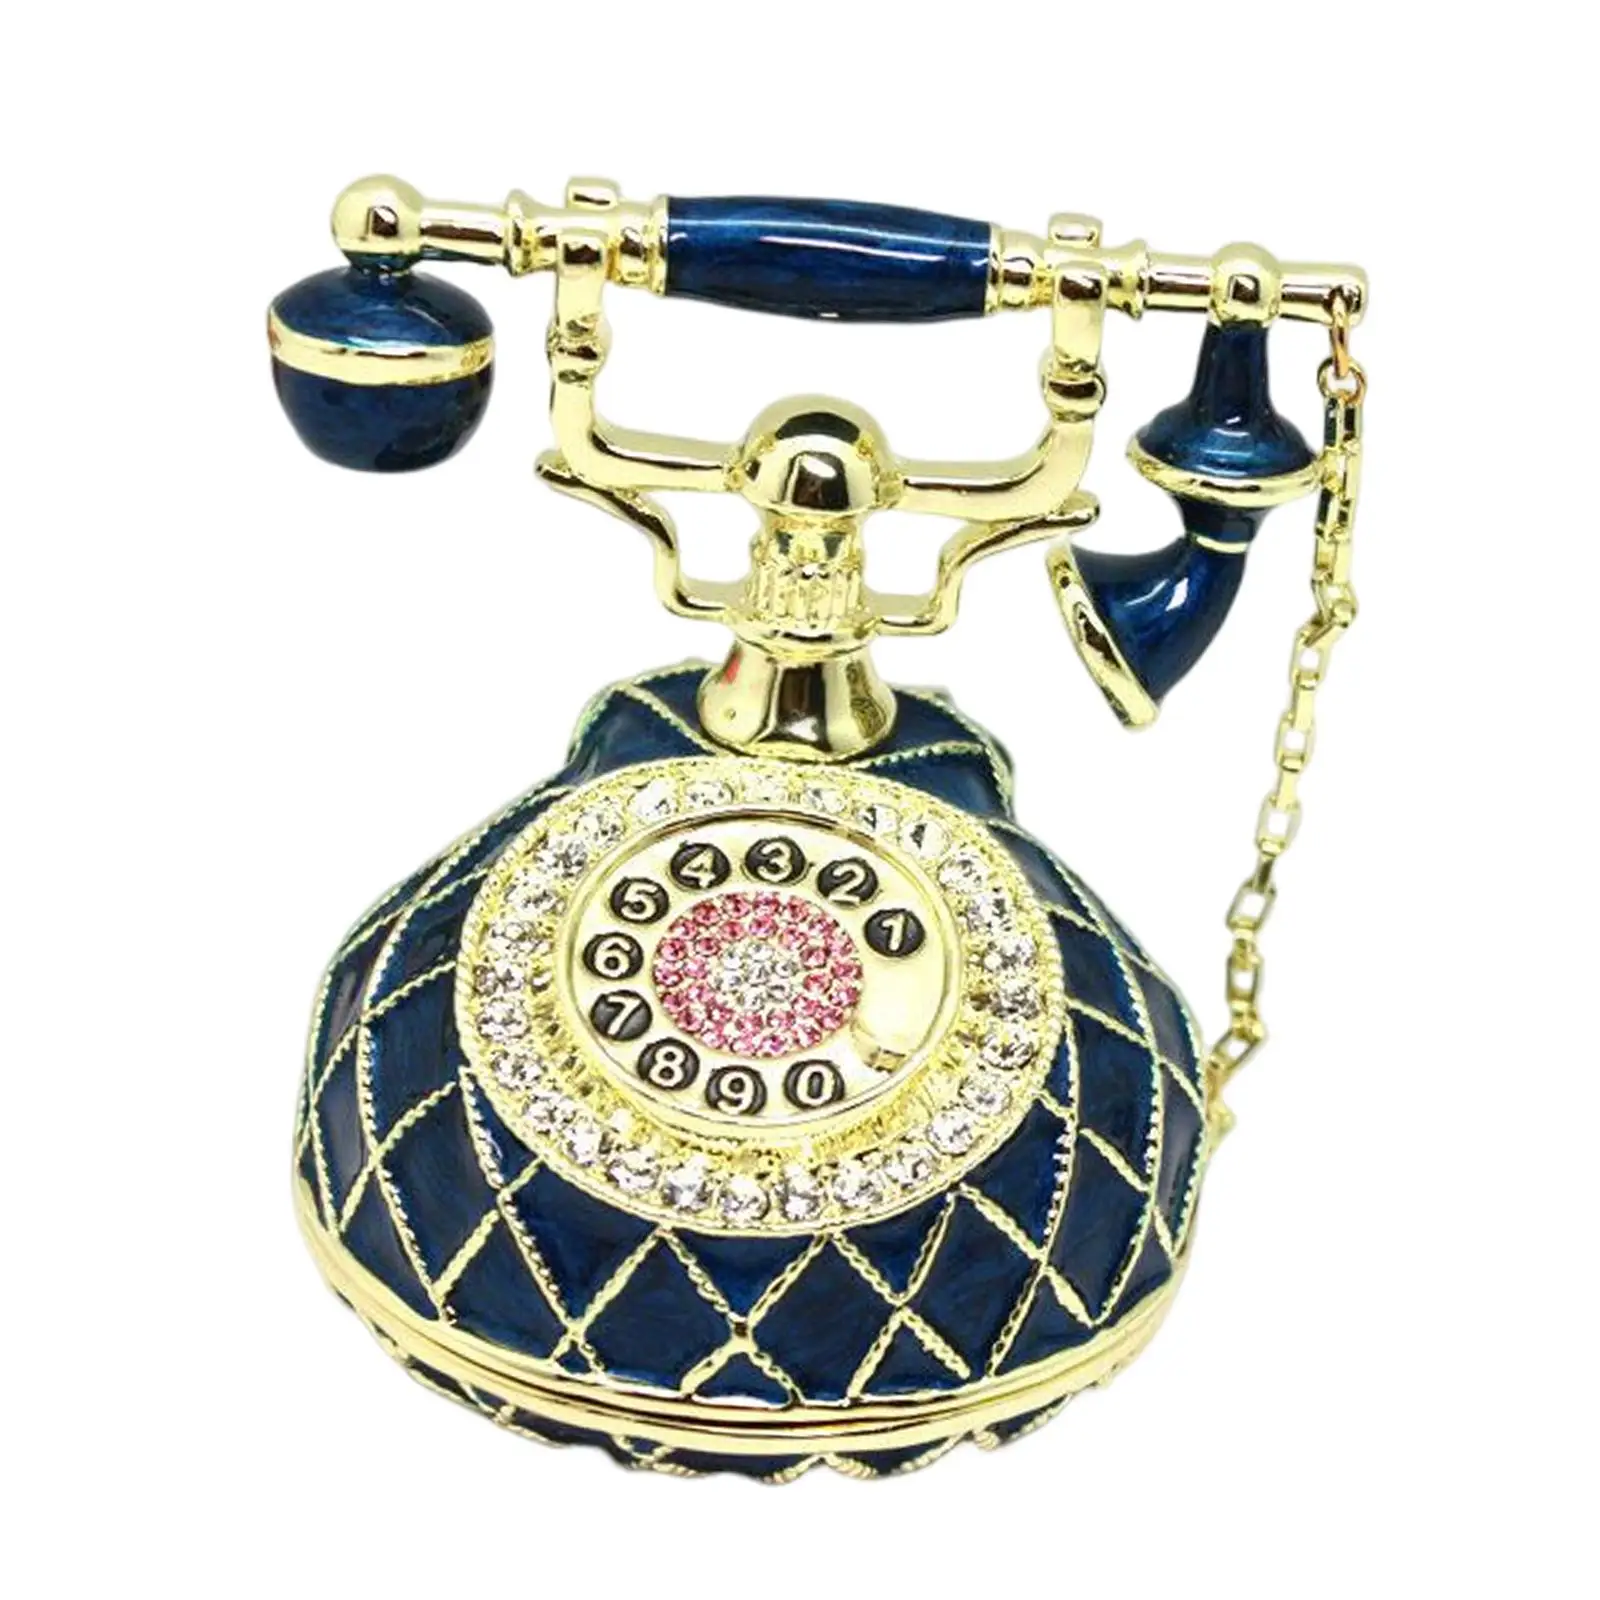 Retro Style Telephone Figurine Jewelry Trinket Box Keepsake Gift Ornaments Enameled Treasure Chest for Earrings Rings Bracelet